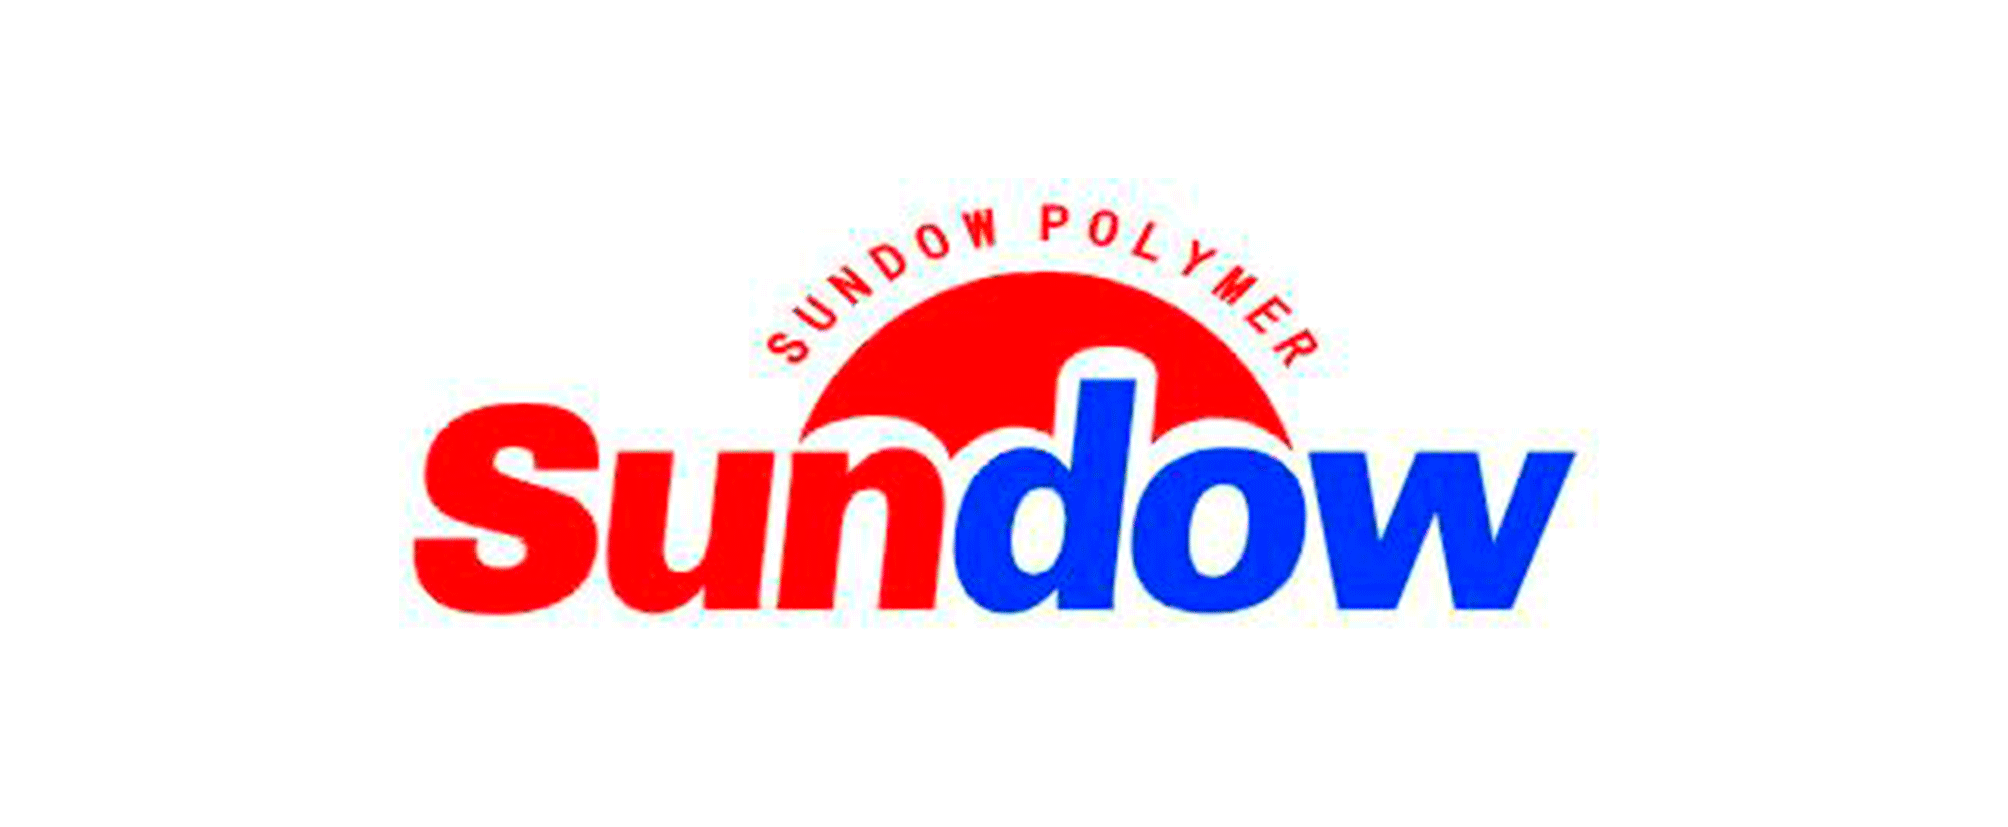 Sundow polymer